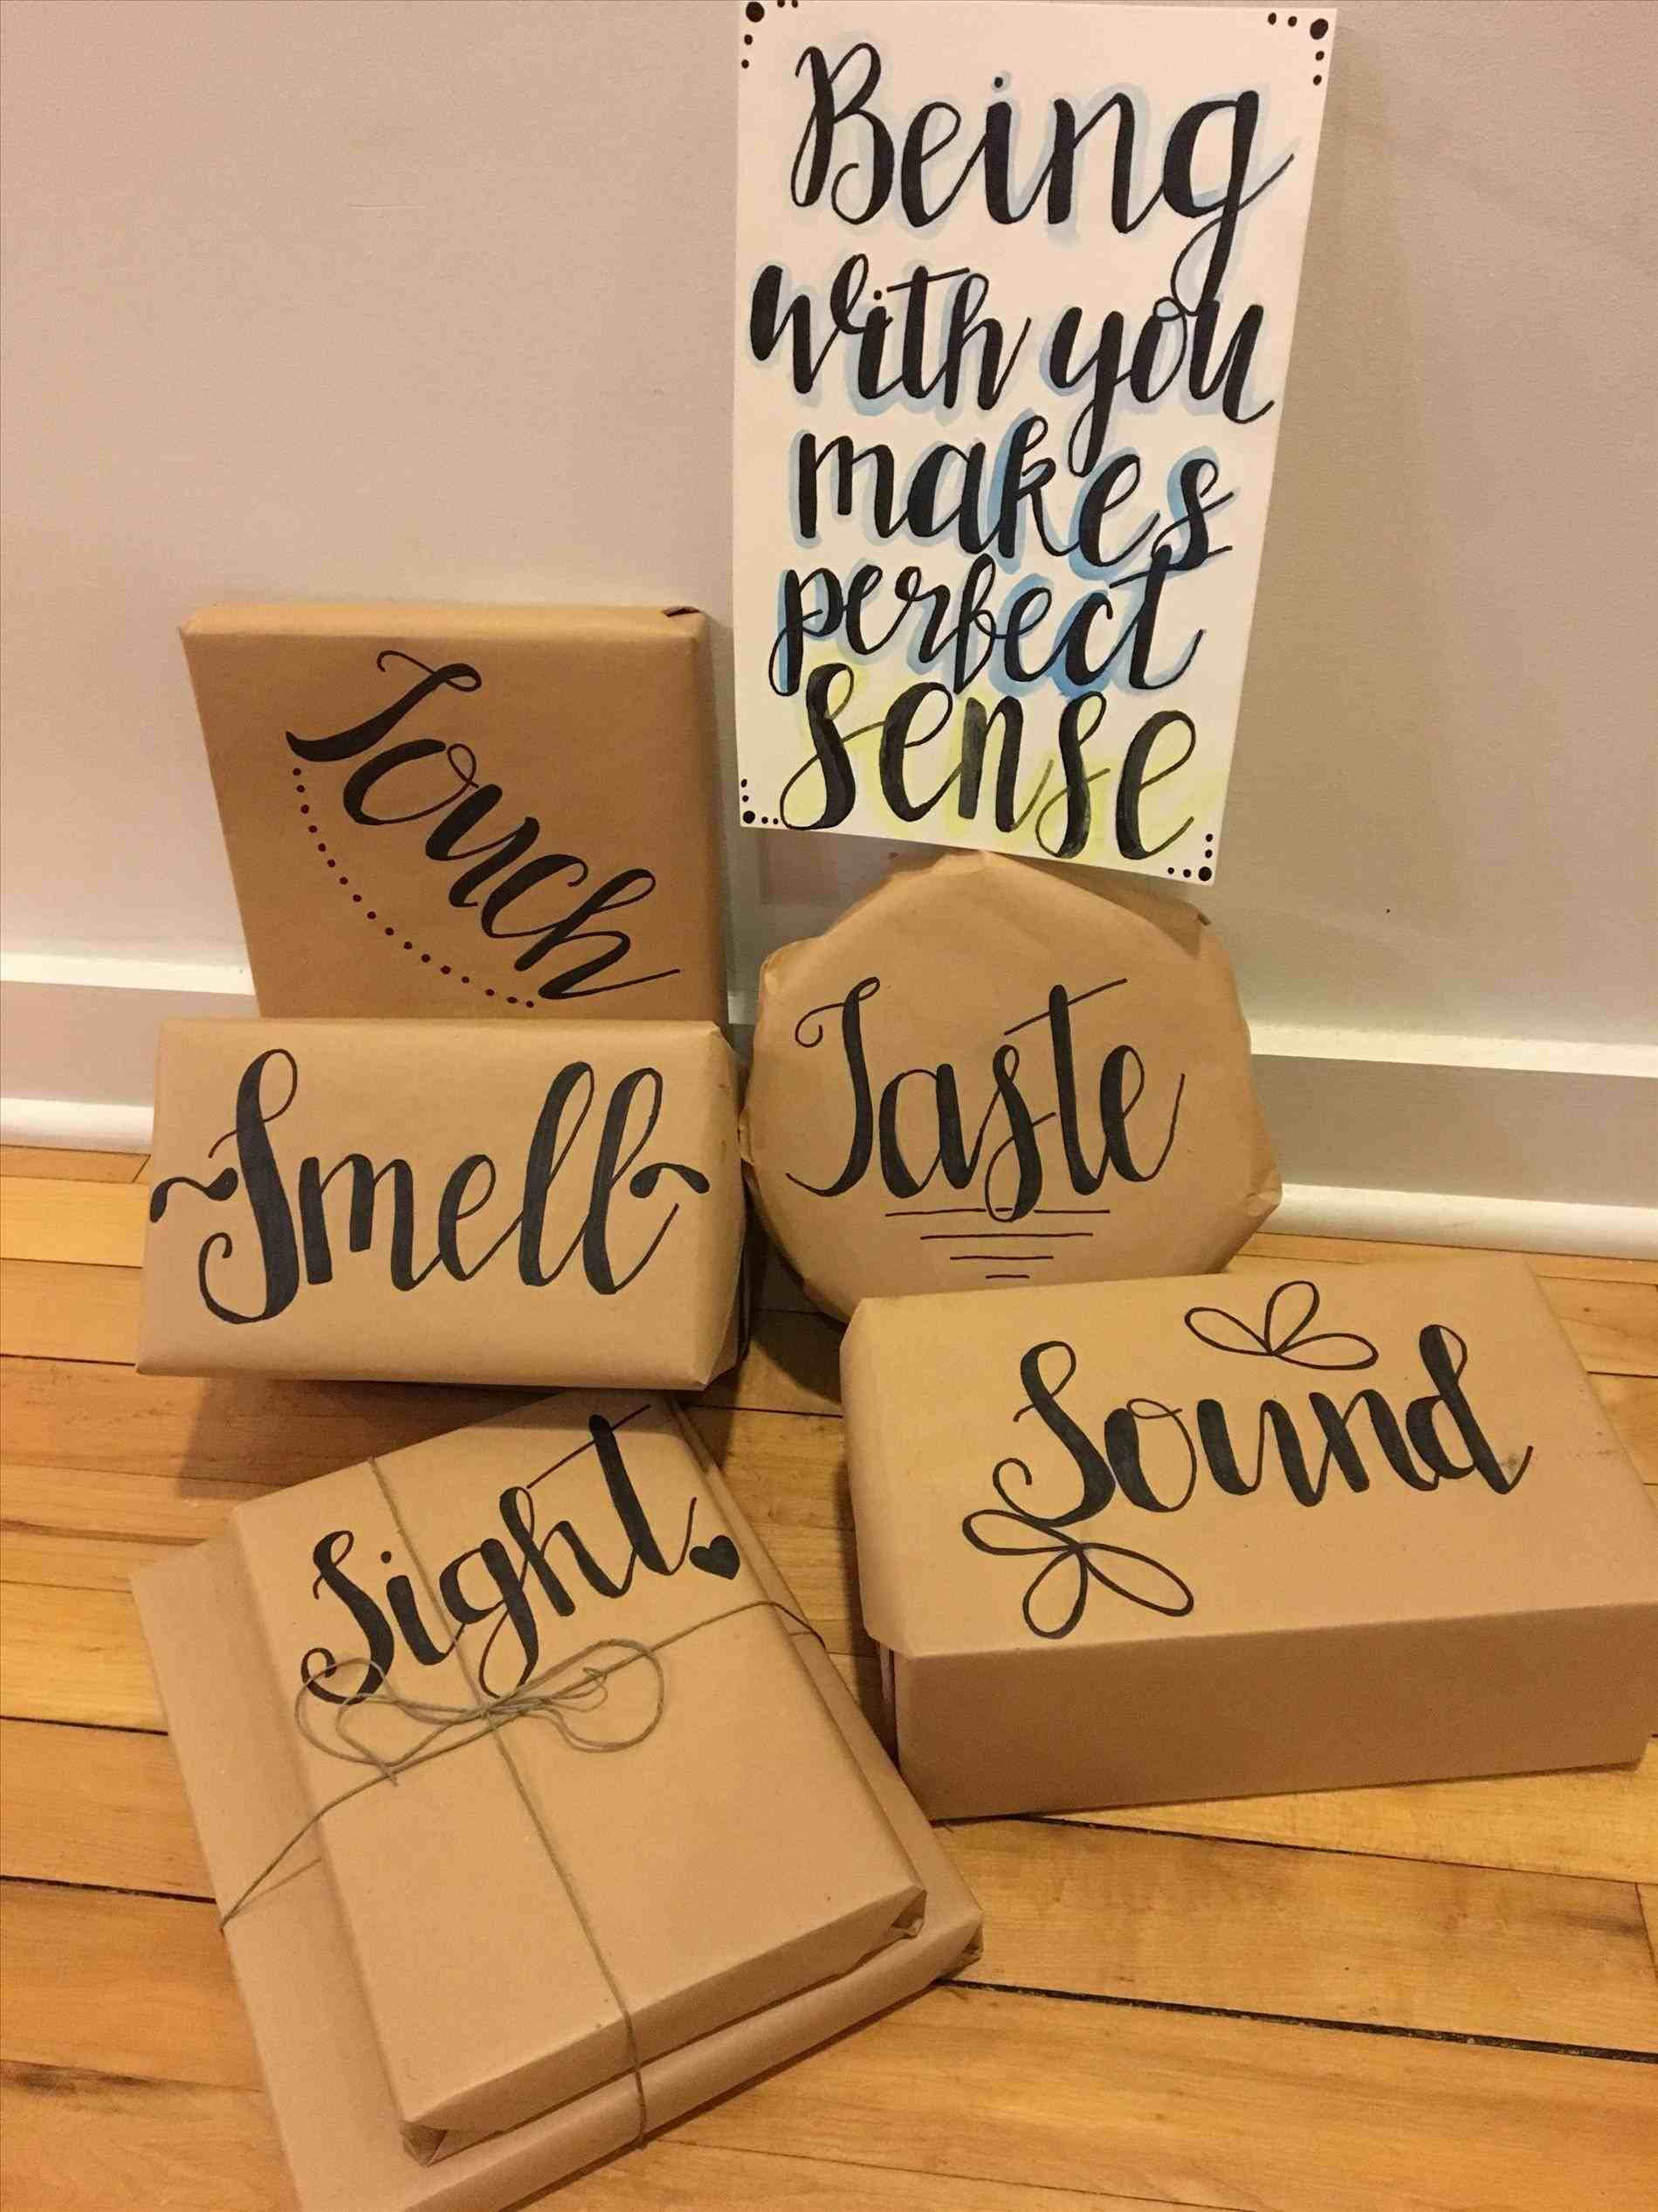 Cute Sentimental Gift Ideas For Boyfriend
 More About creative t ideas for boyfriend Update ipmserie